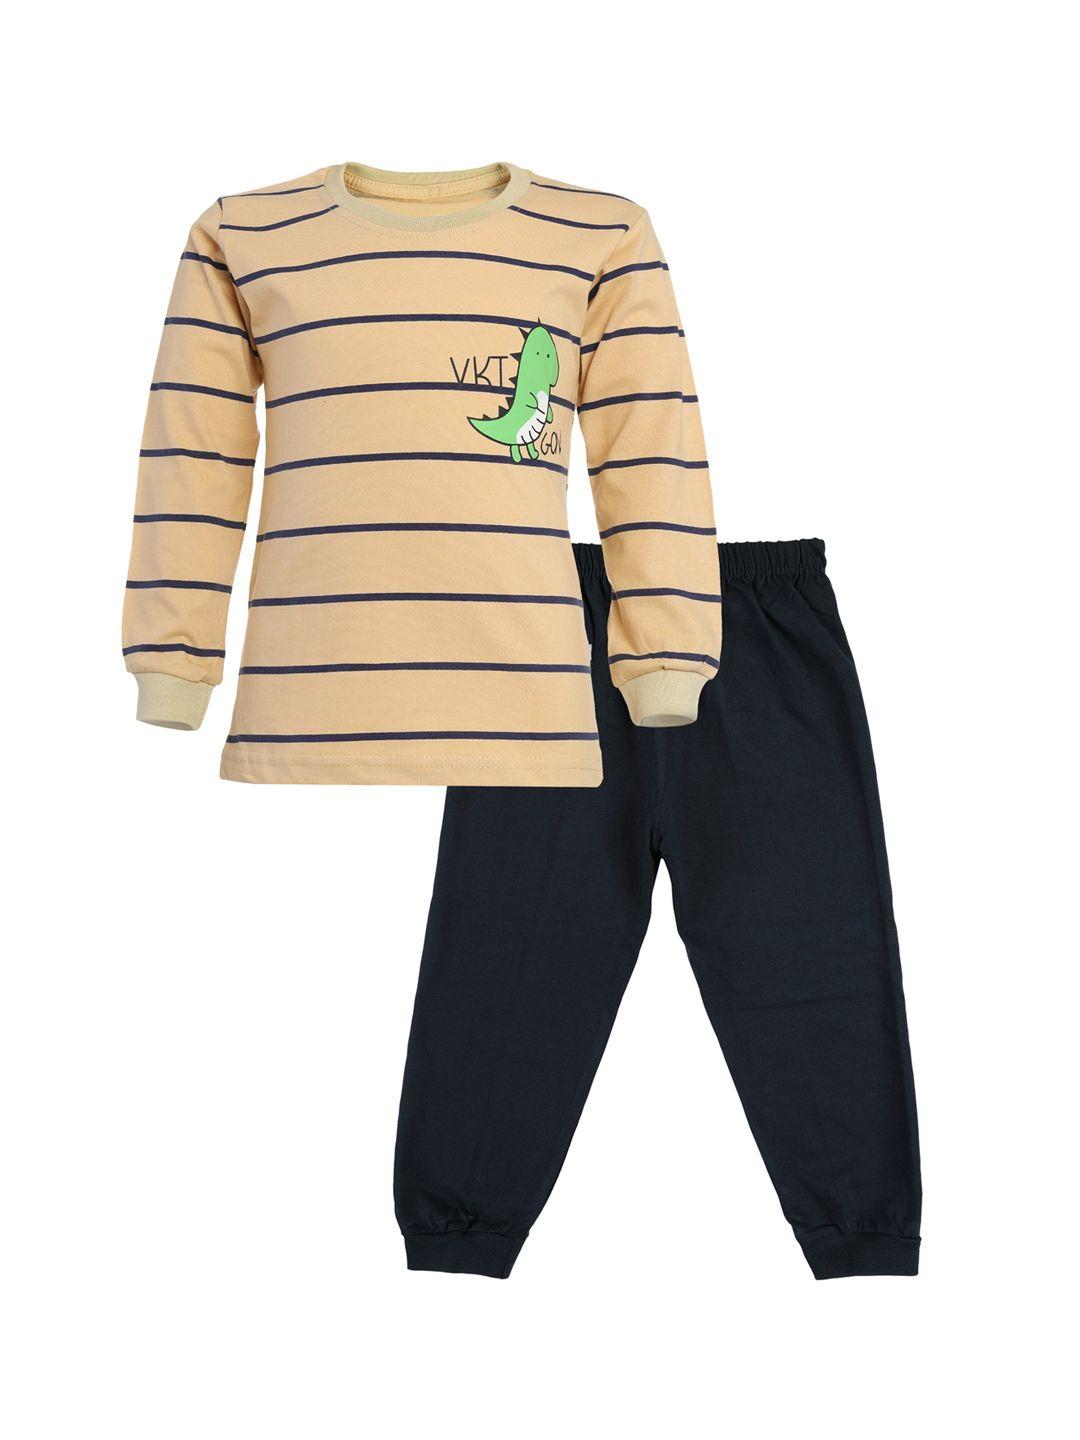 catcub-unisex-kids-beige-&-black-printed-t-shirt-with-trousers